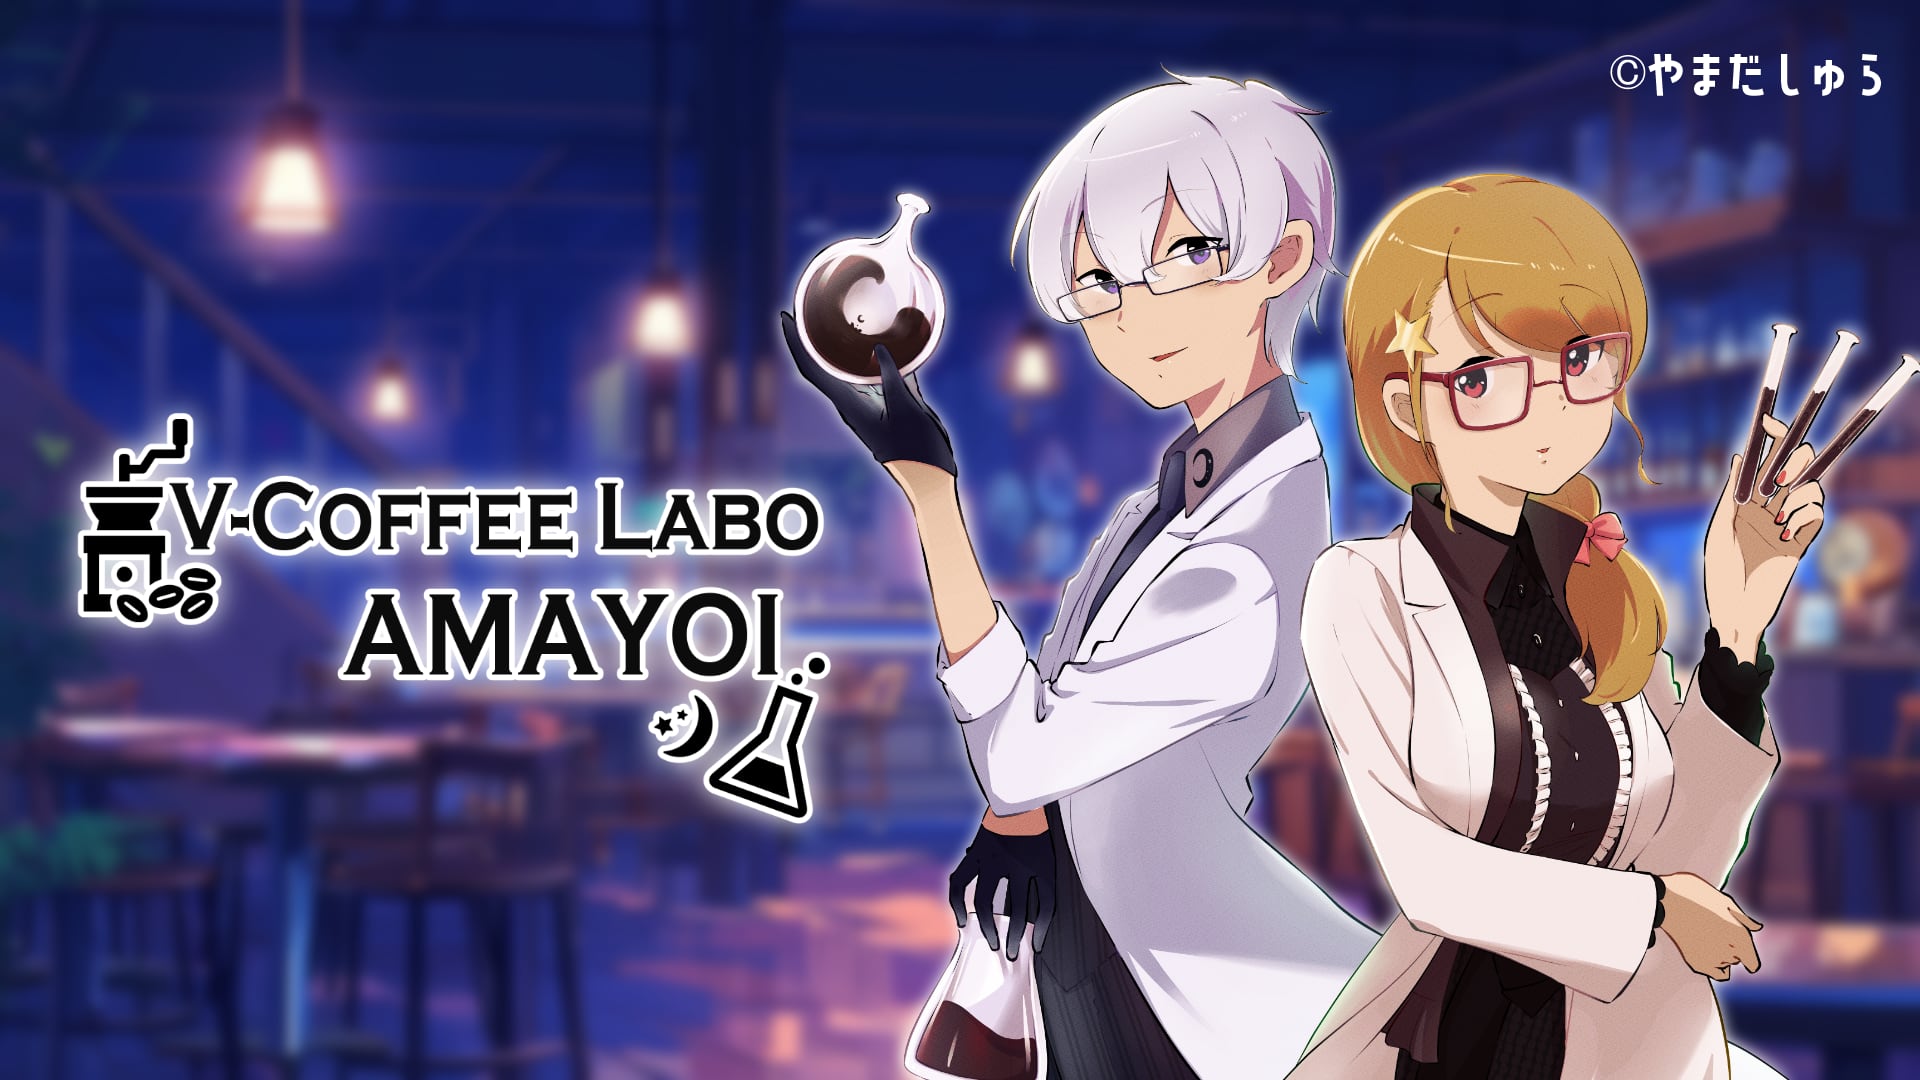 V-COFFEE LABO AMAYOI